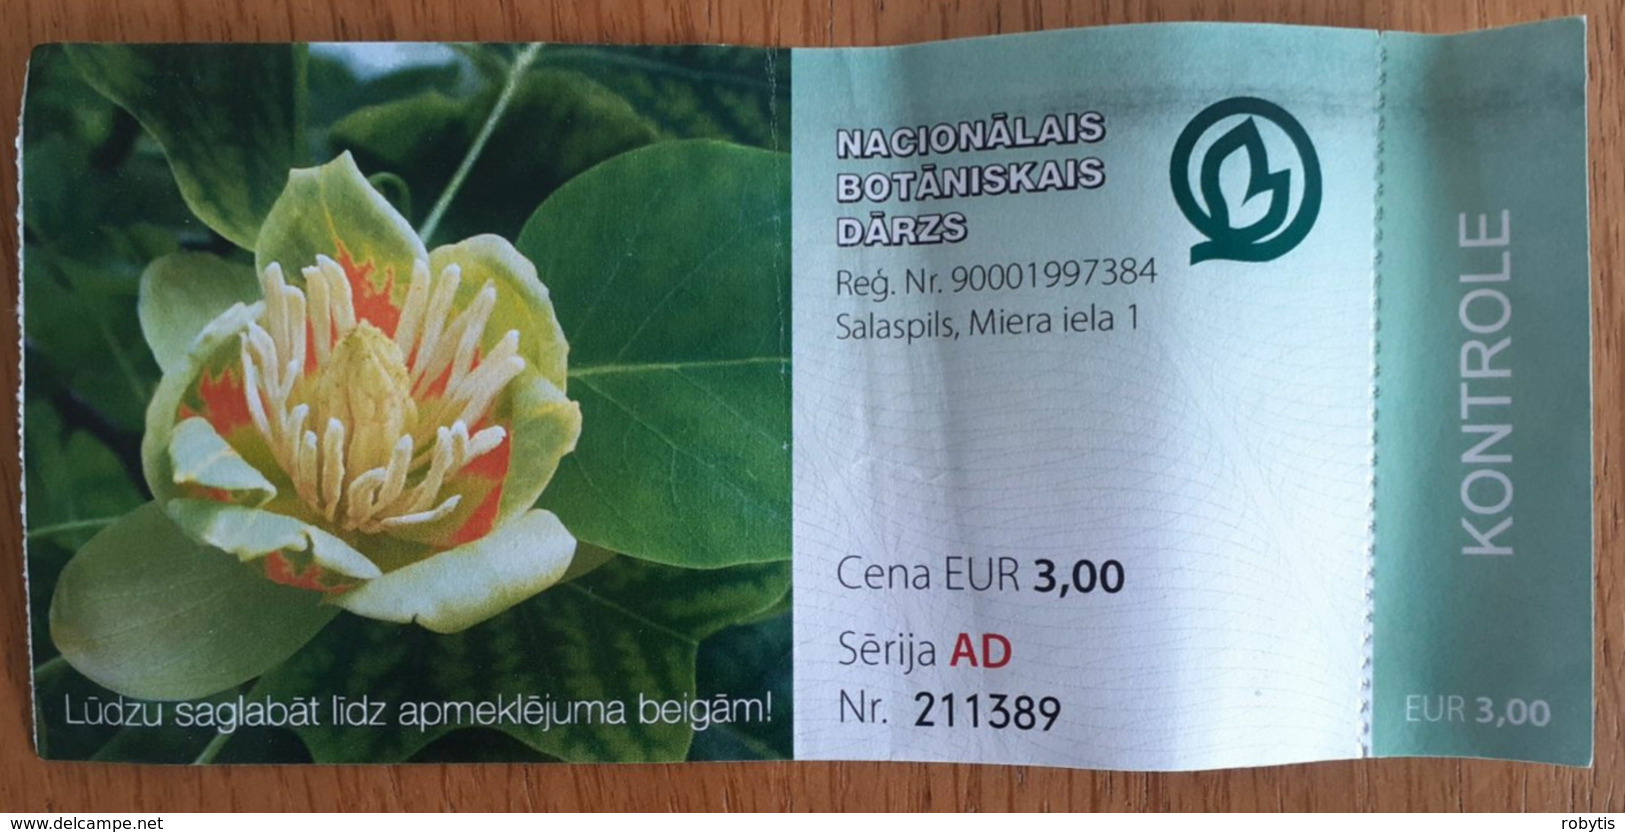 Latvia National Botanical Garden Ticket - Tickets - Vouchers